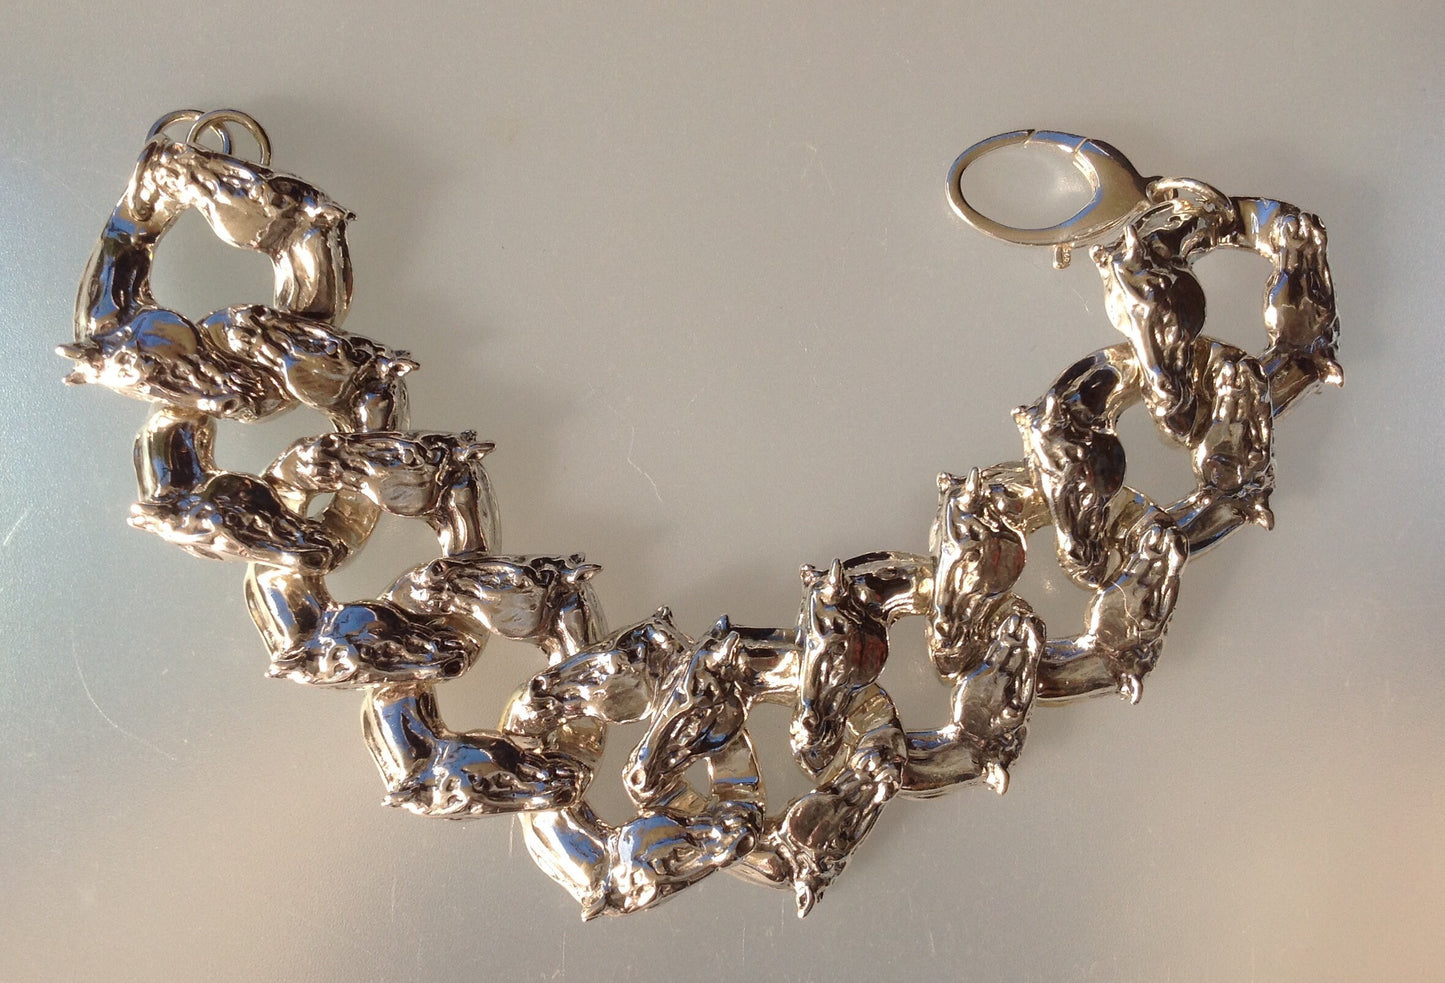 Order for:  Large horse link bracelet. Horses 1" links in sterling silver handmade Artisan Zimmer jewelry